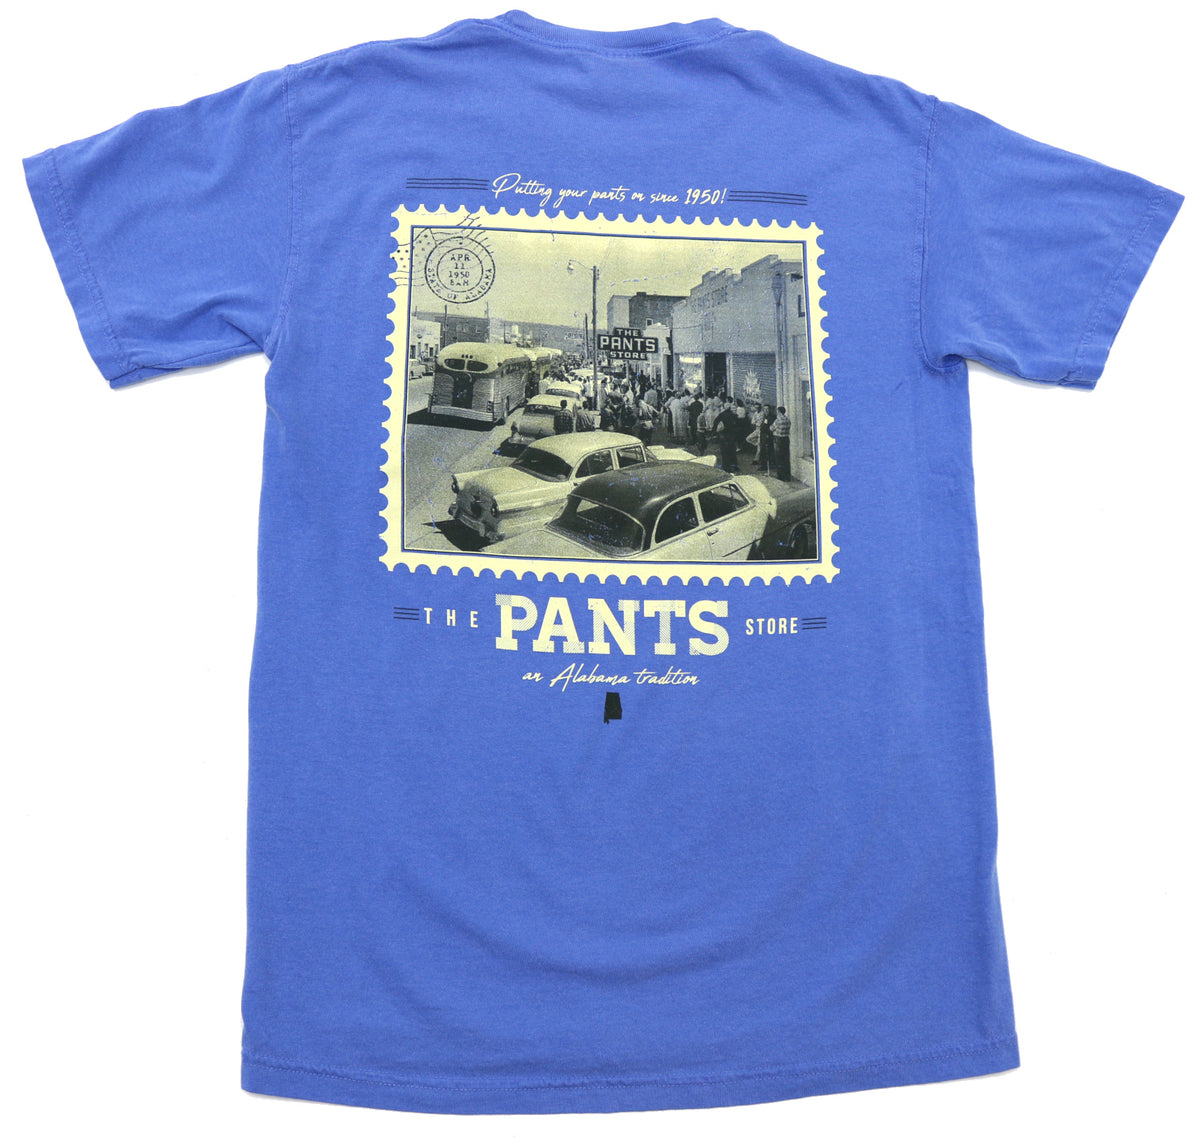 Pants Store Since 1950 Tee Shirt